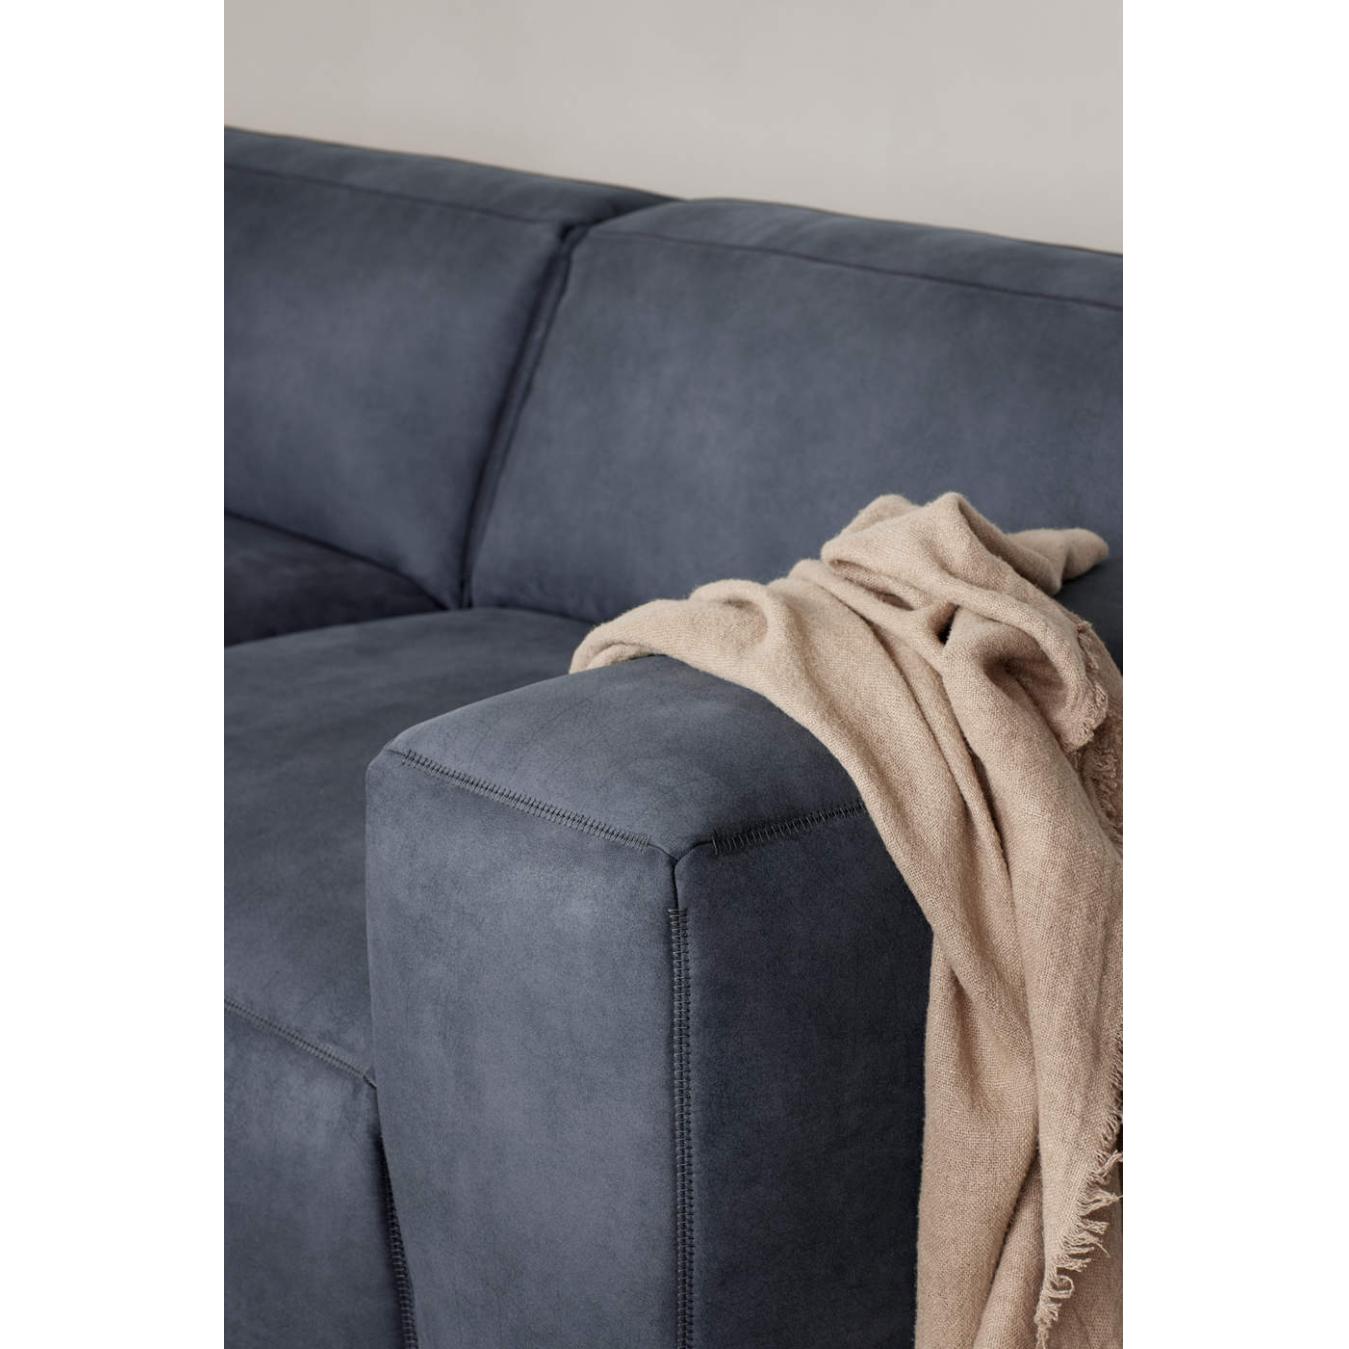 Flexlux LUCERA sofa // Lucera kanapé